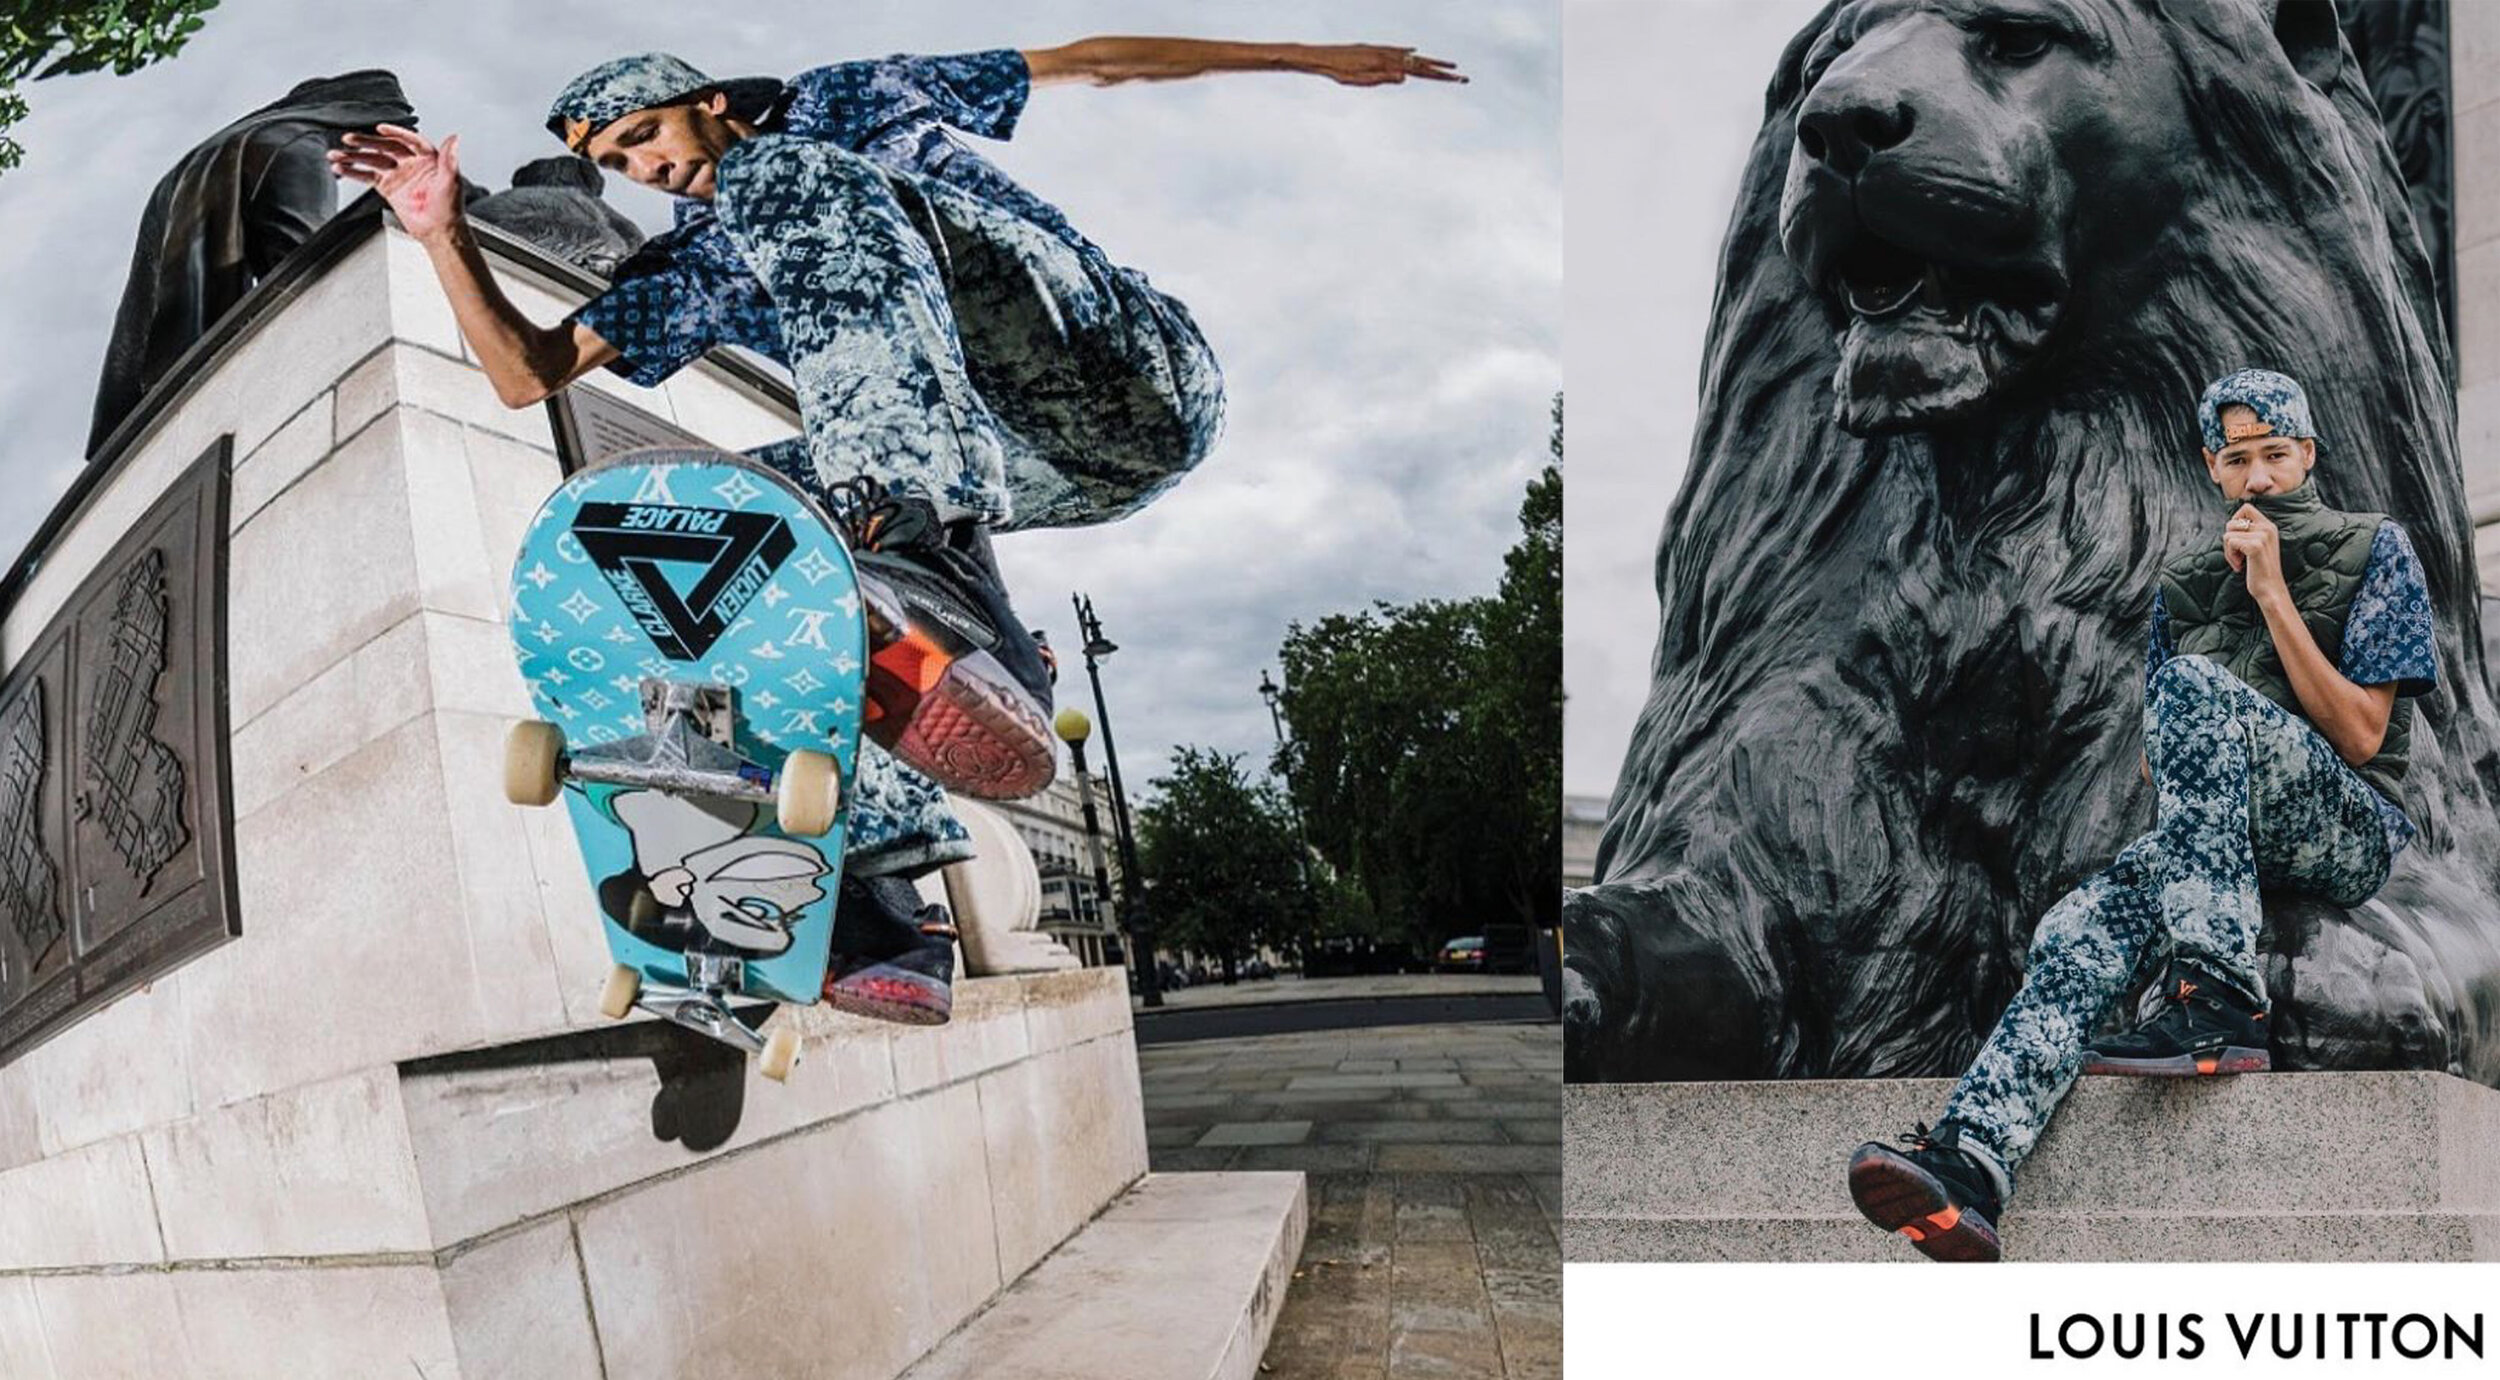 Louis Vuitton flirts with skateboarding again